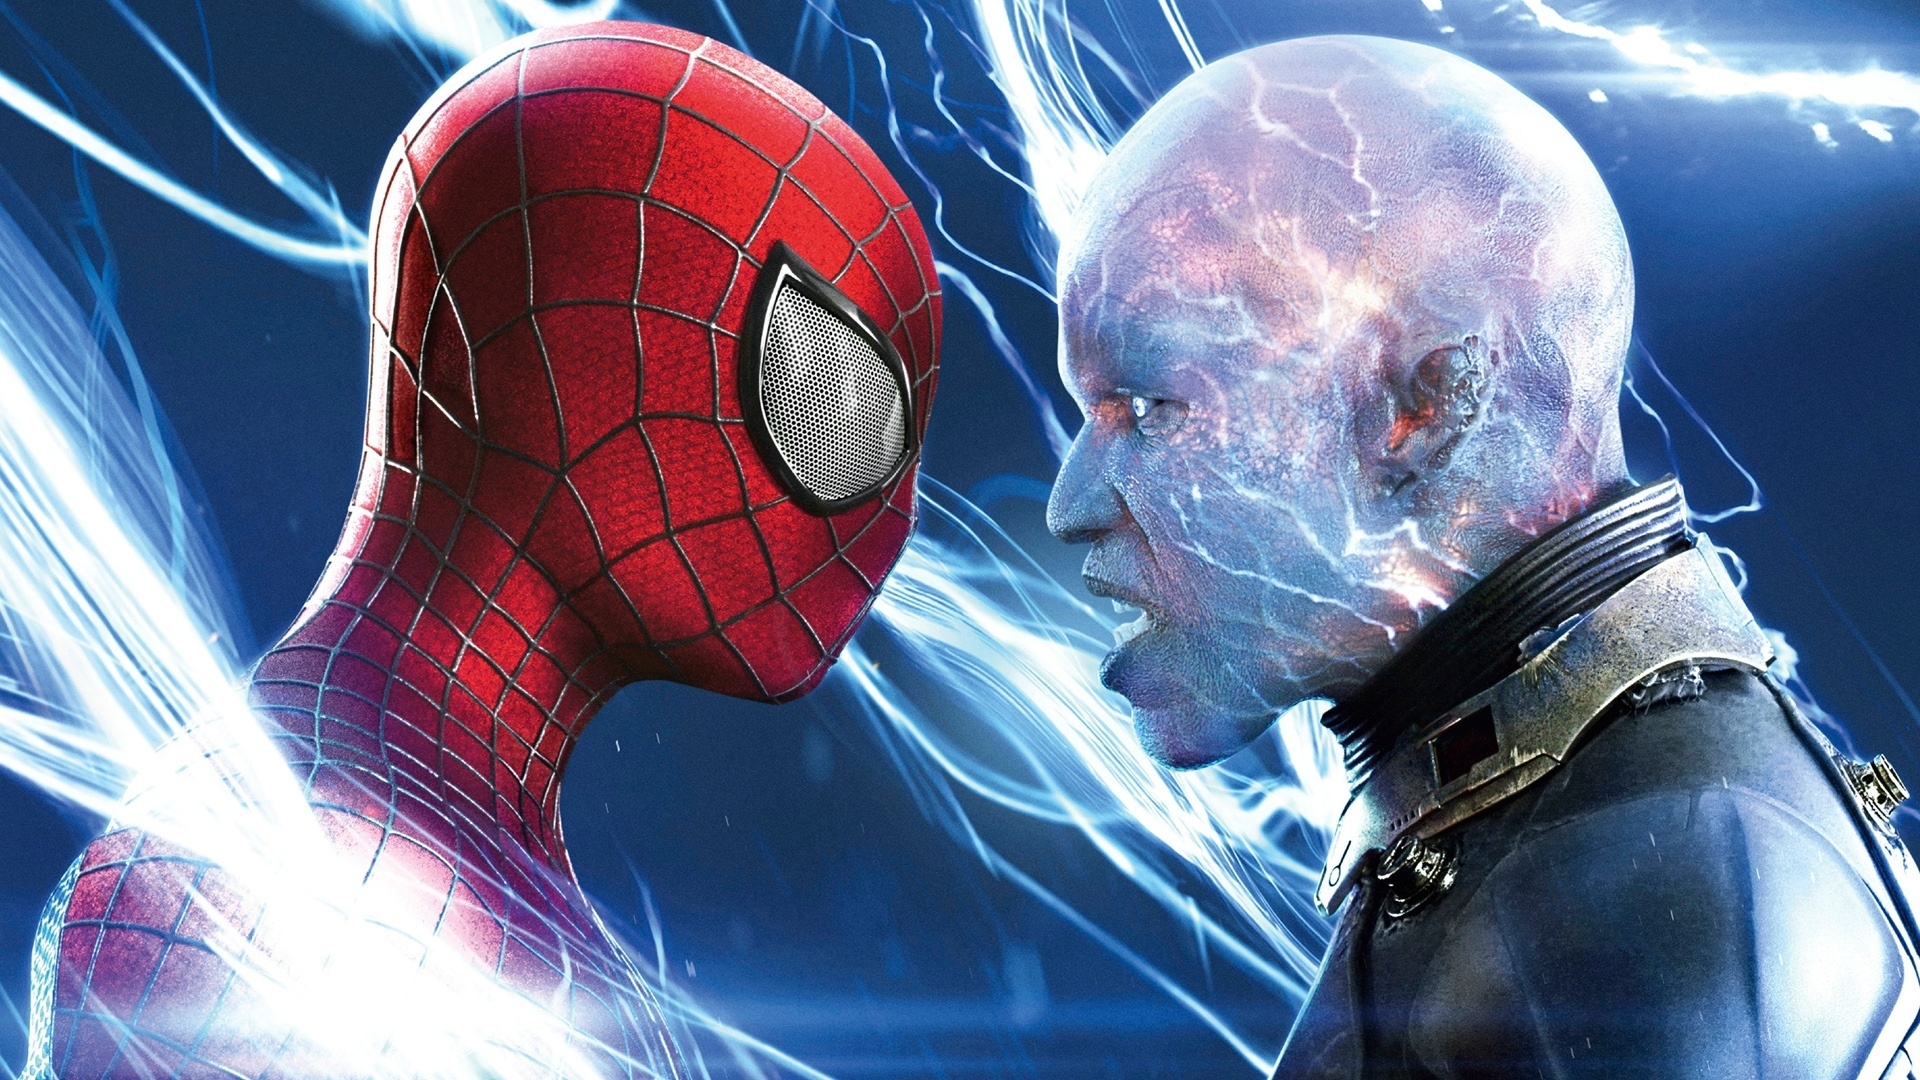 Spiderman vs Electro for 1920 x 1080 HDTV 1080p resolution